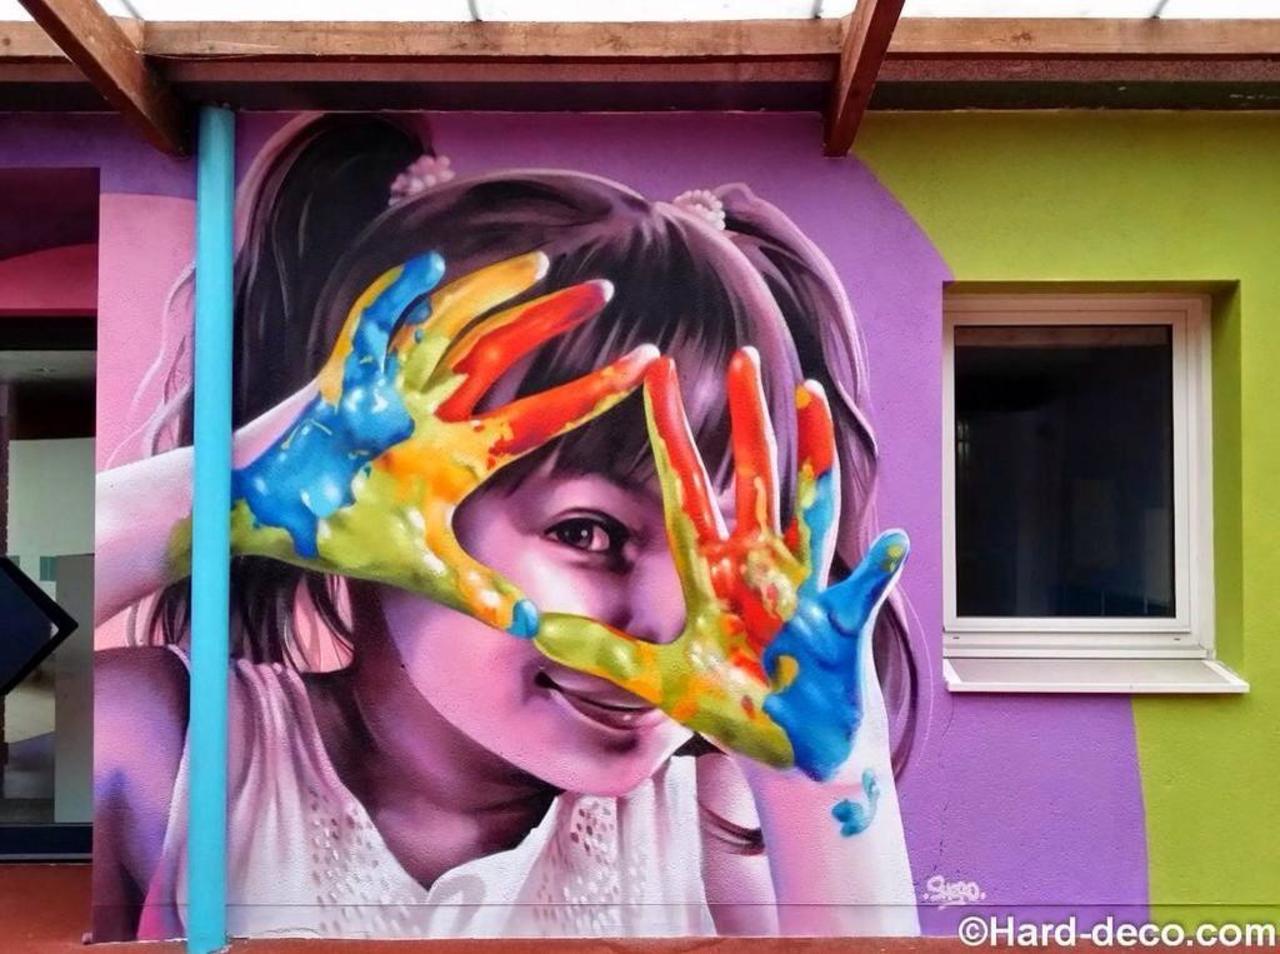 RT @designopinion: Artist Hard Deco hyperrealistic Street Art portrait located in Paris, France #art #mural #graffiti #streetart http://t.co/AdbxK5T0Aw